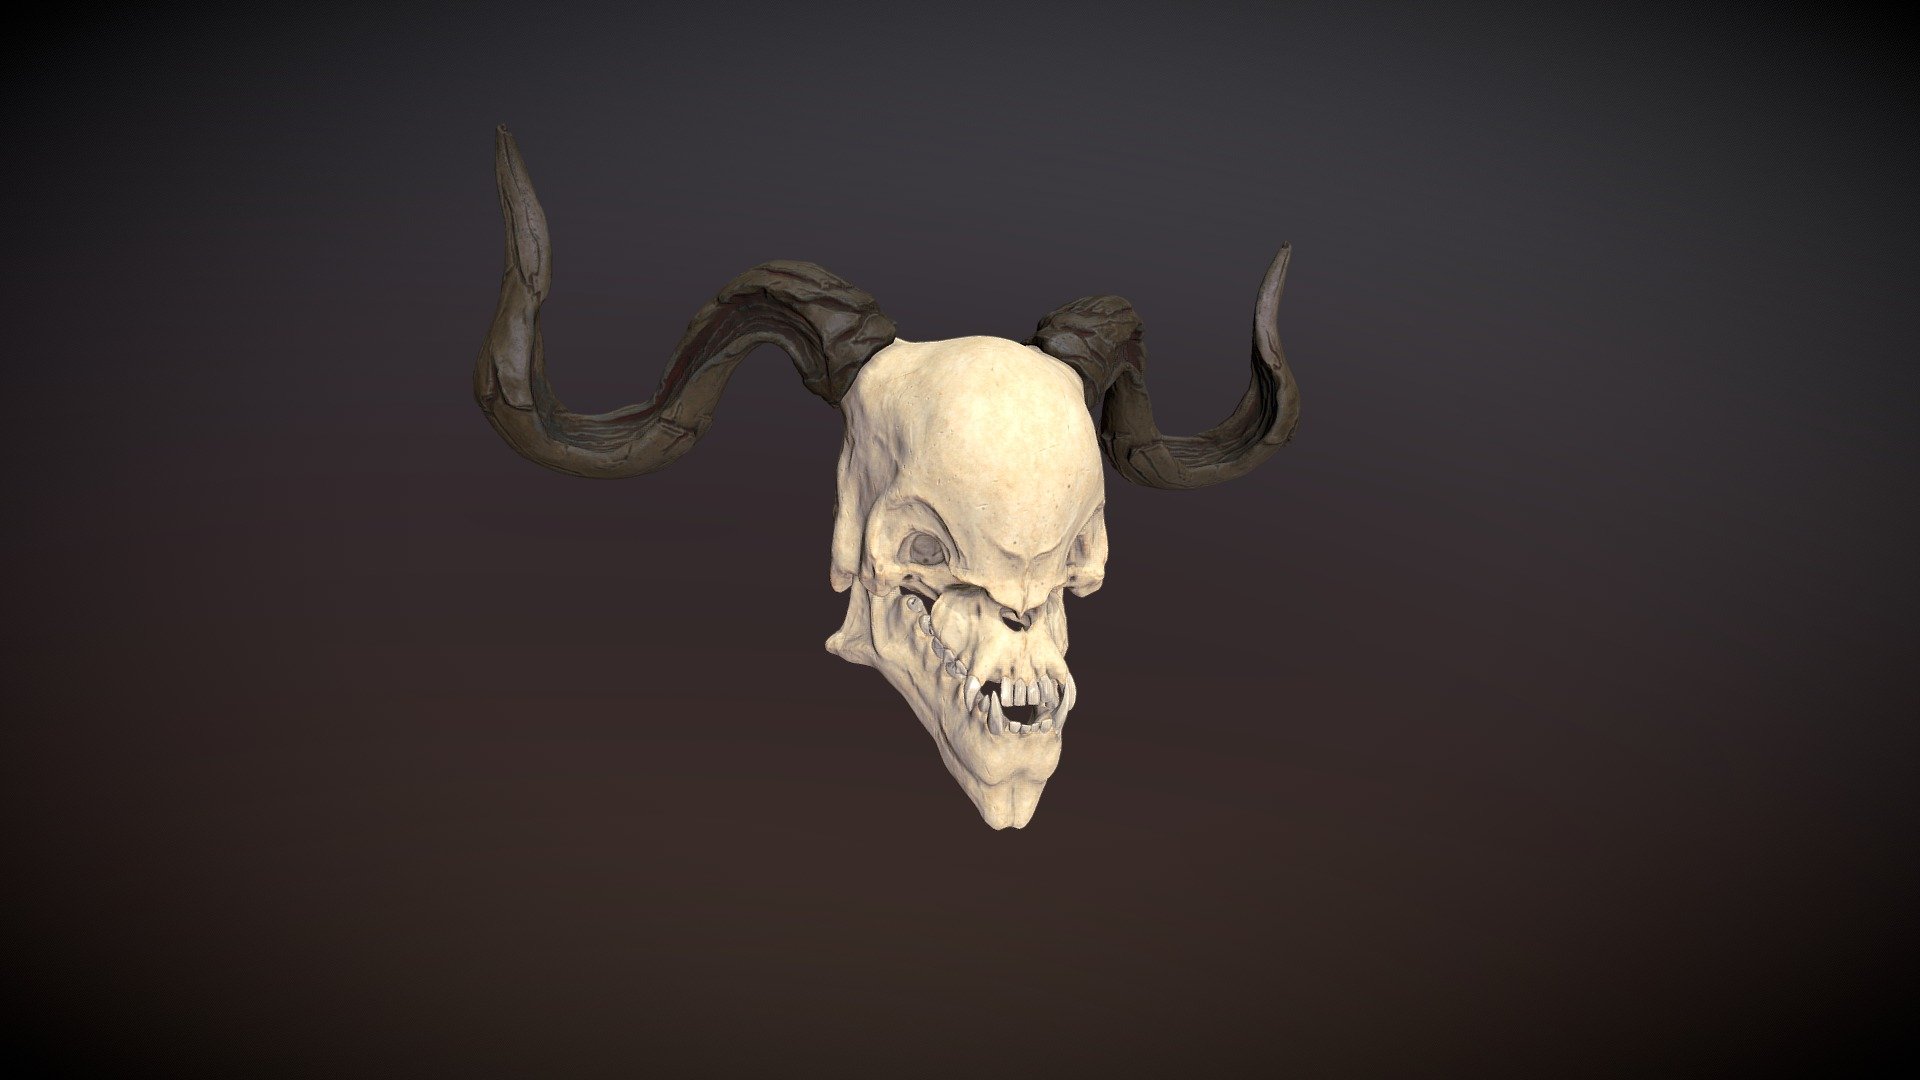 Sculpting in Zbrush, Substance painter texturing,rendering.
More:
https://www.artstation.com/artwork/6aBnl5 - Demons skull - Download Free 3D model by Demetrios Mazurok (@demetriosmazurok) 3d model